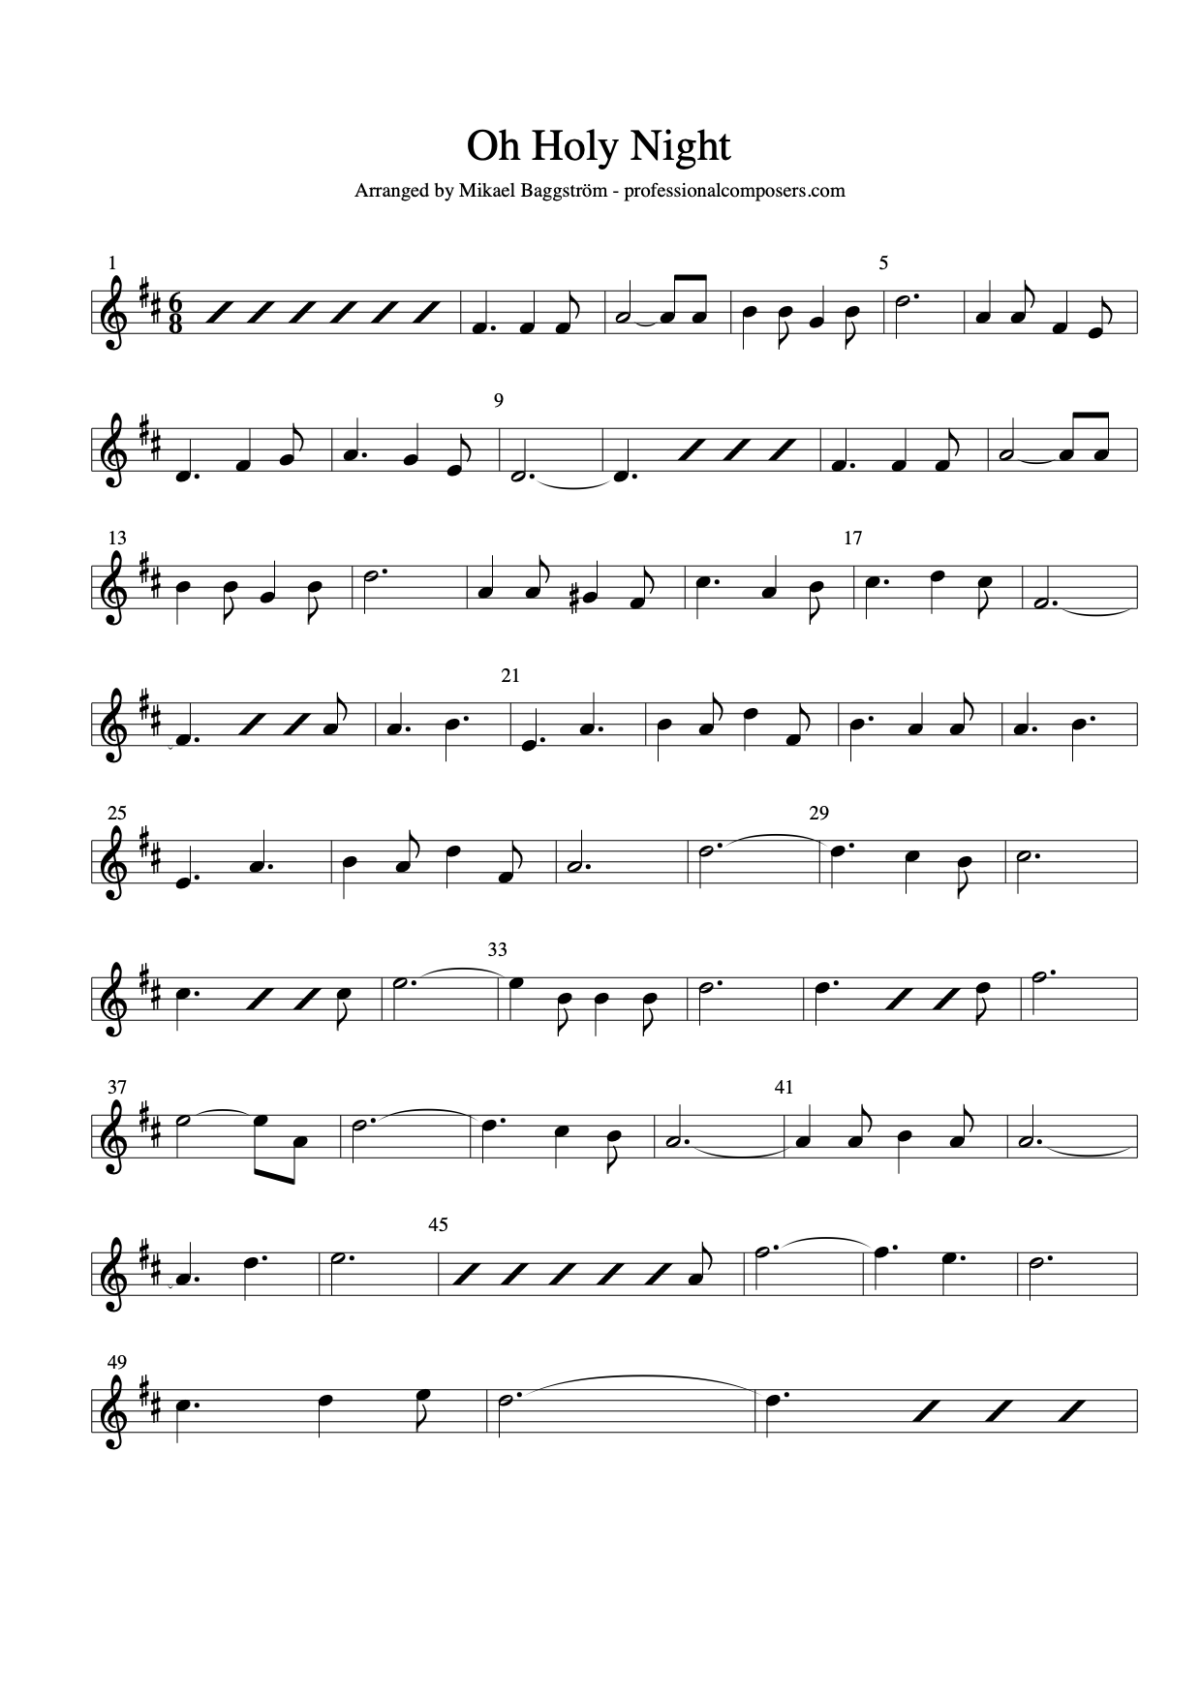 Oh Holy Night - Sheet Music (Free Printable)